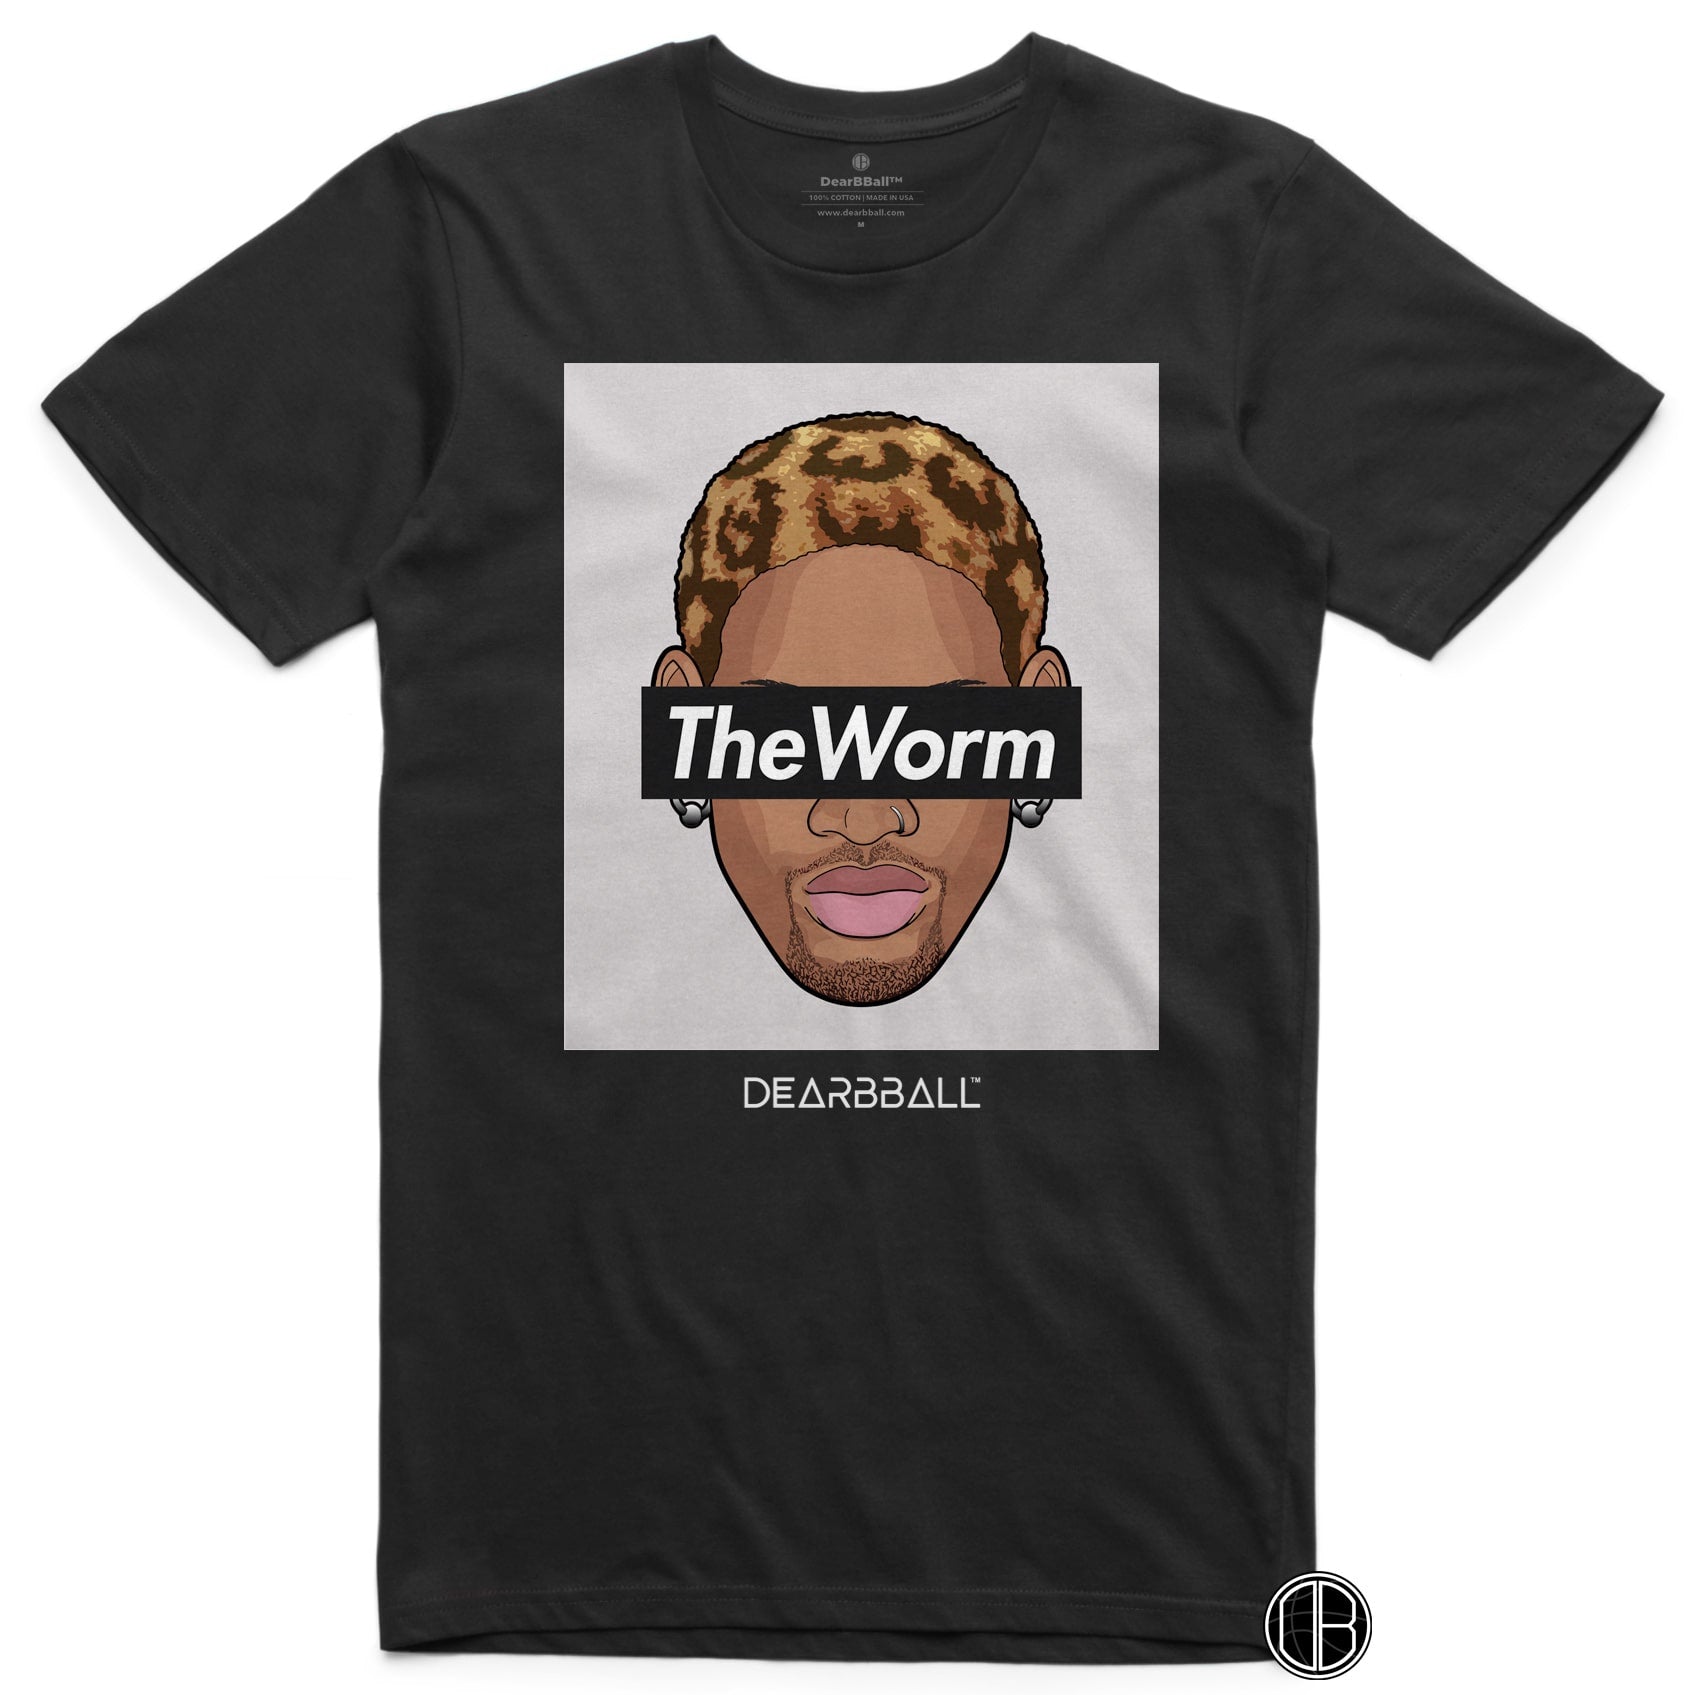 DearBBall T-Shirt - The WORM Hair Leopard Edition